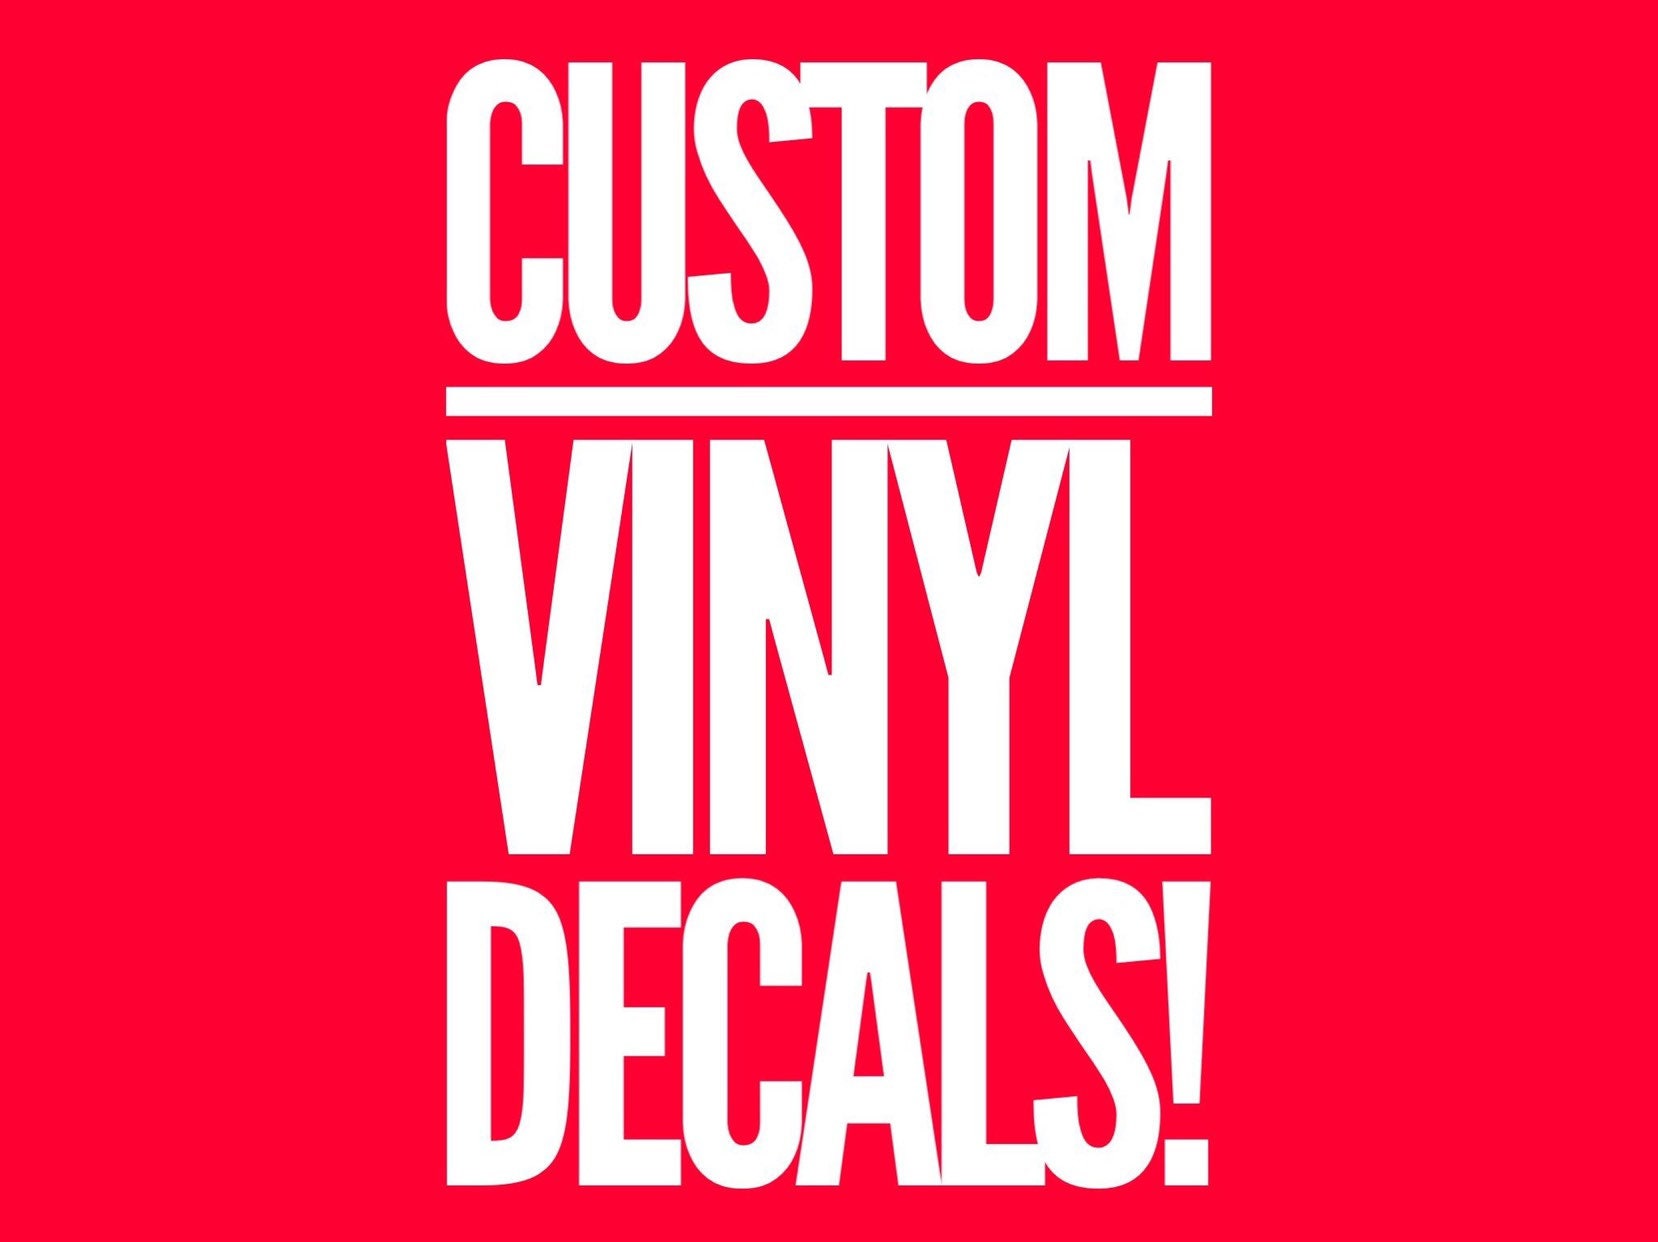 Custom vinyl decals